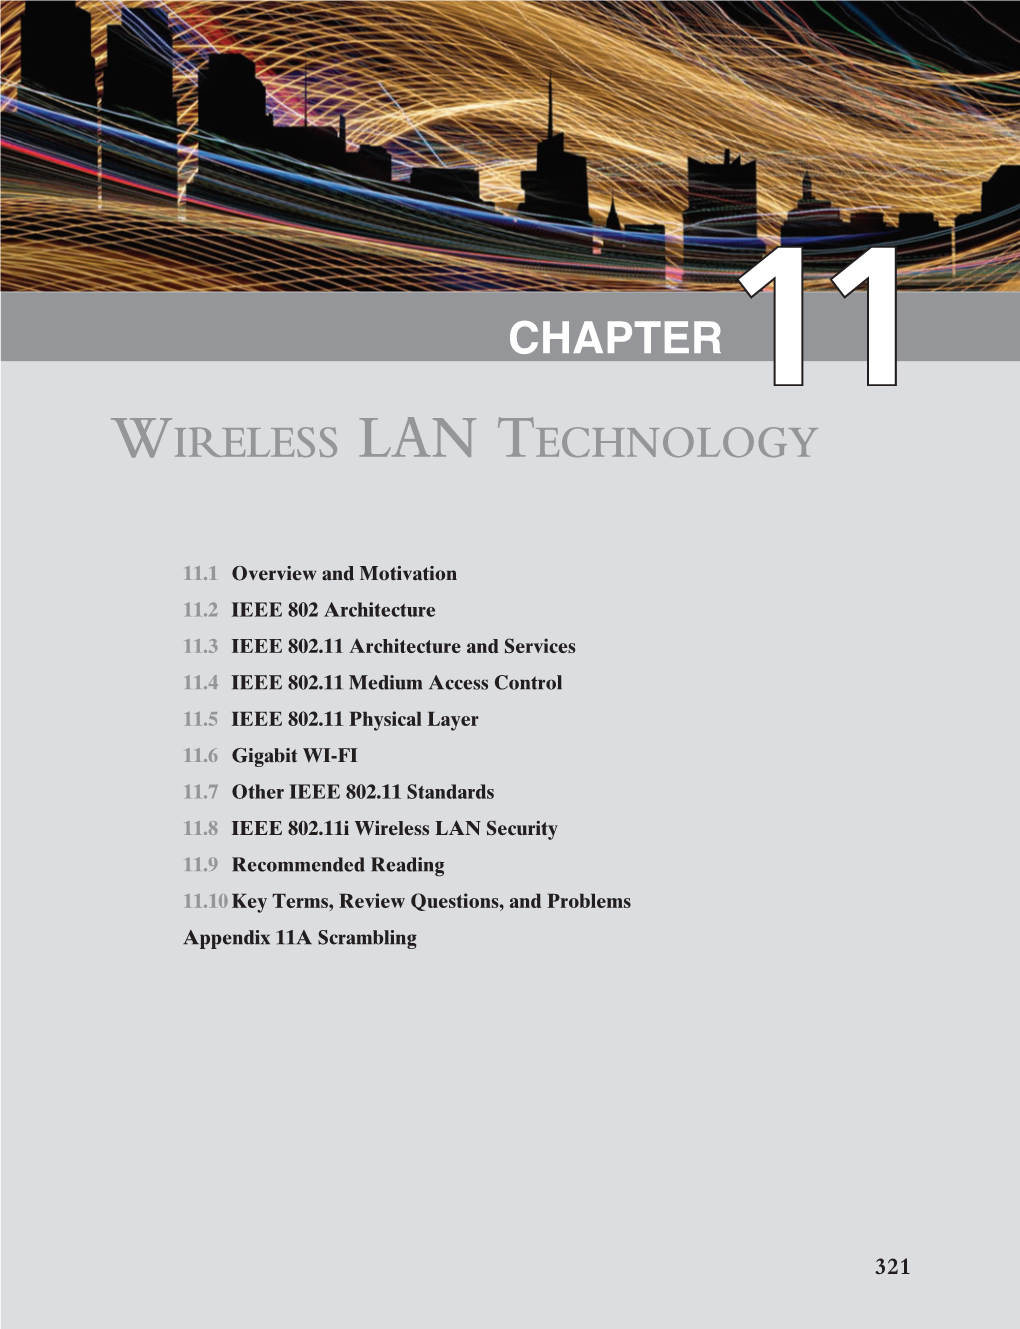 Wireless LAN Technology